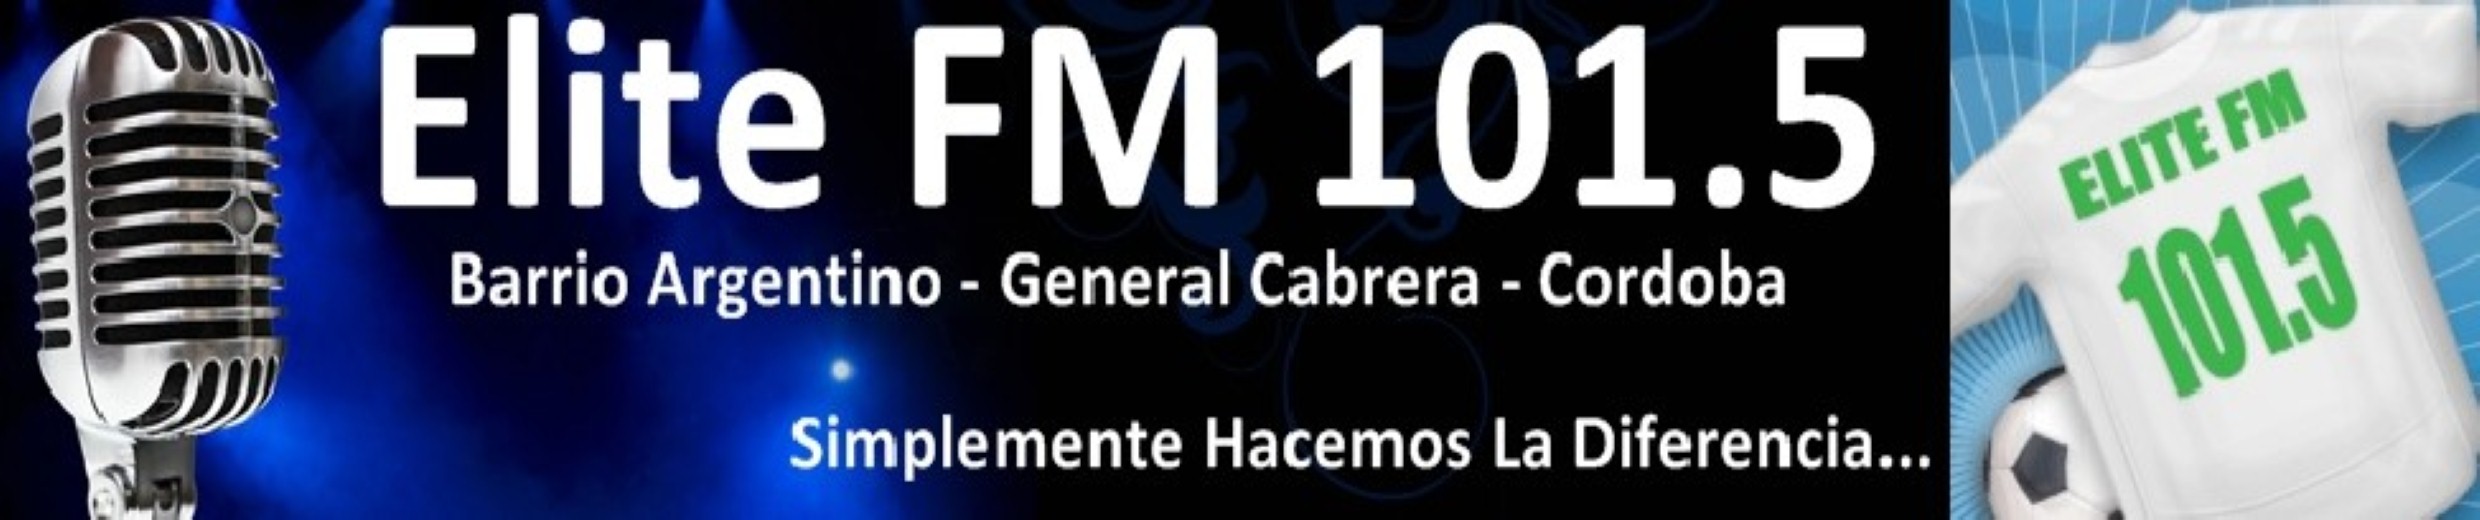 Elite FM 101.5 & Online - Barrio Argentino, General Cabrera, Cordoba, Argentina